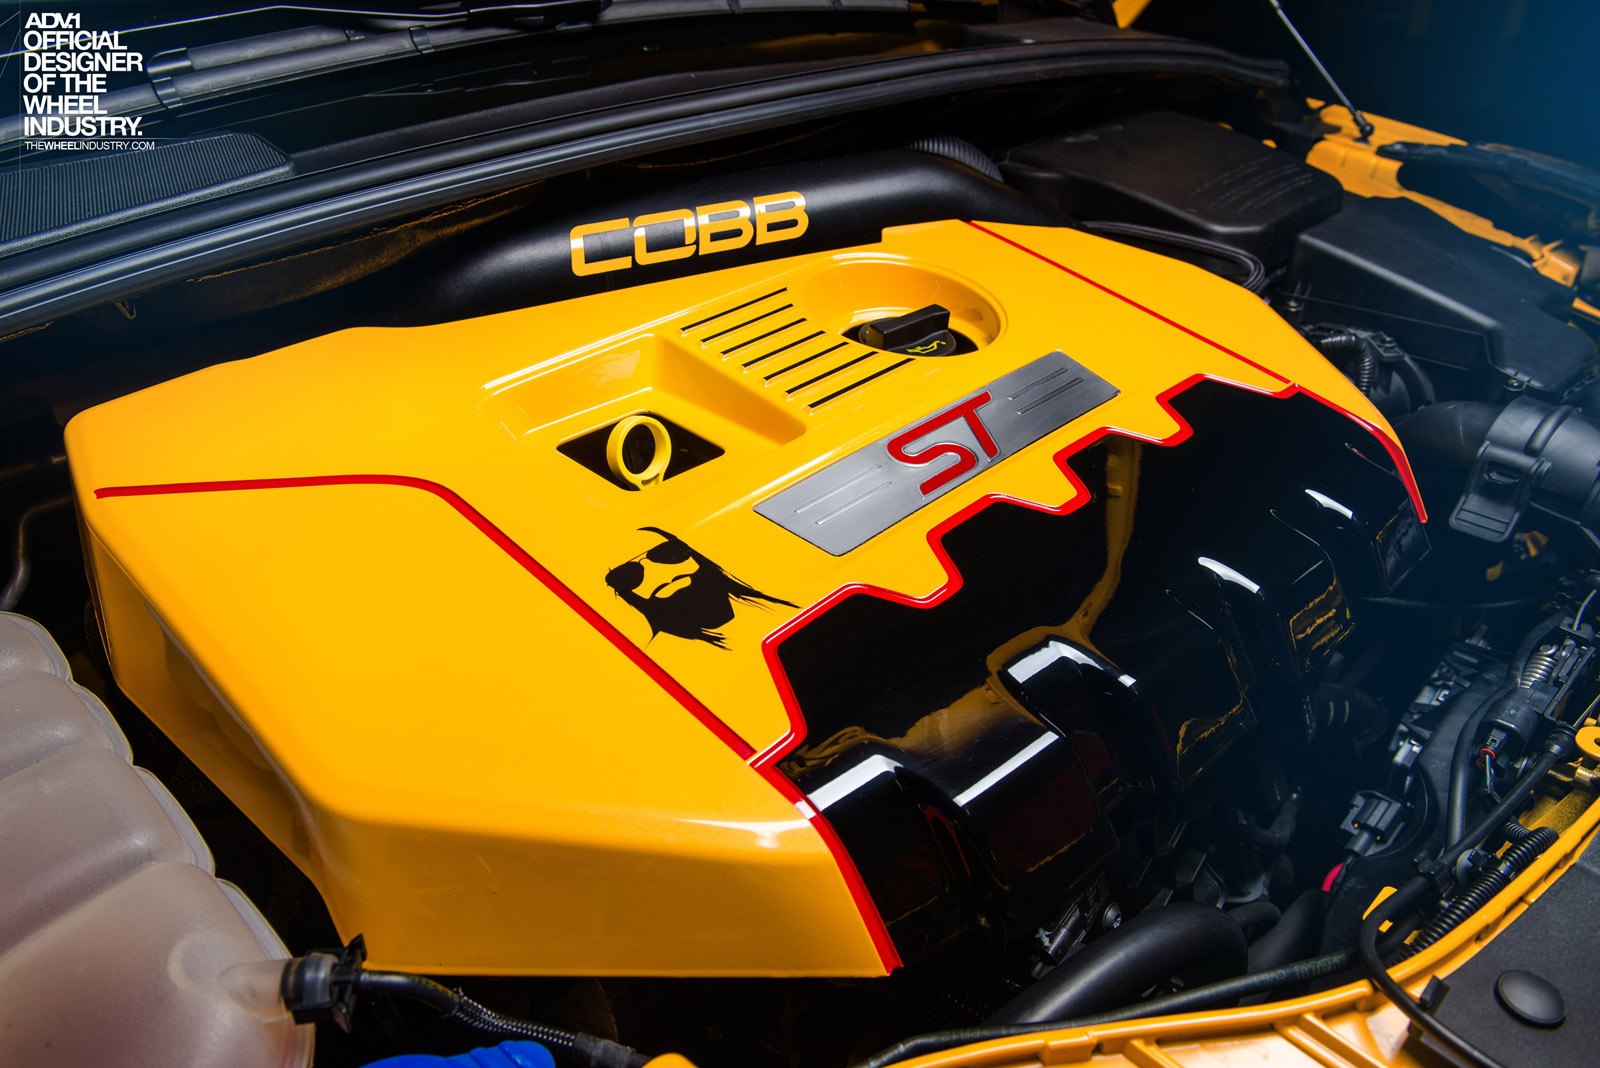 Custom Cobb Engine in Yellow Ford Fiesta - Photo by ADV.1